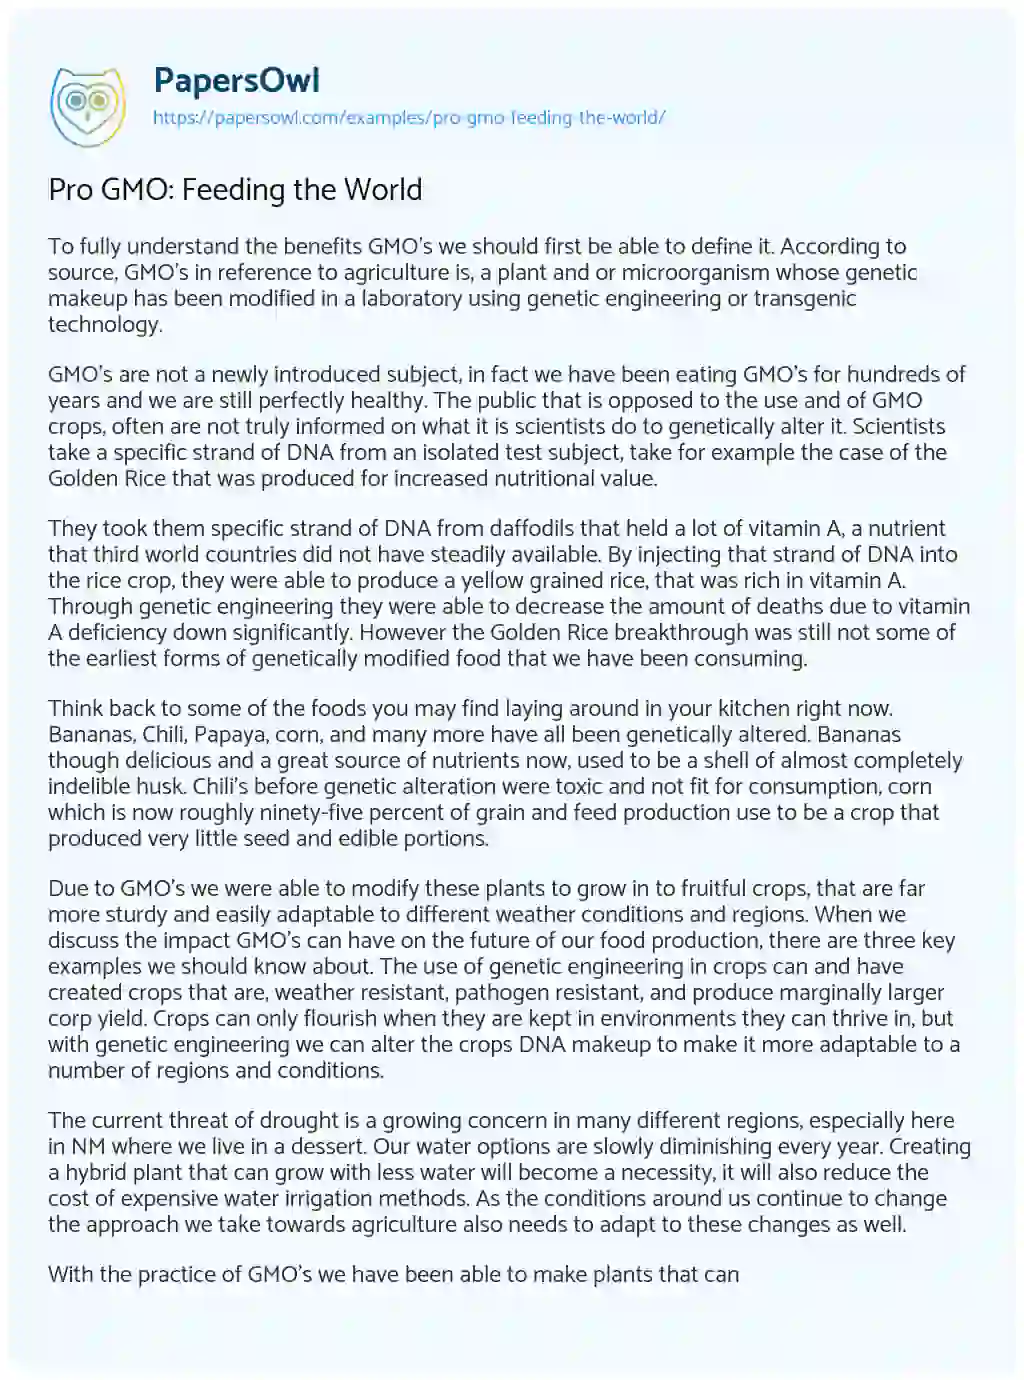 Essay on Pro GMO: Feeding the World